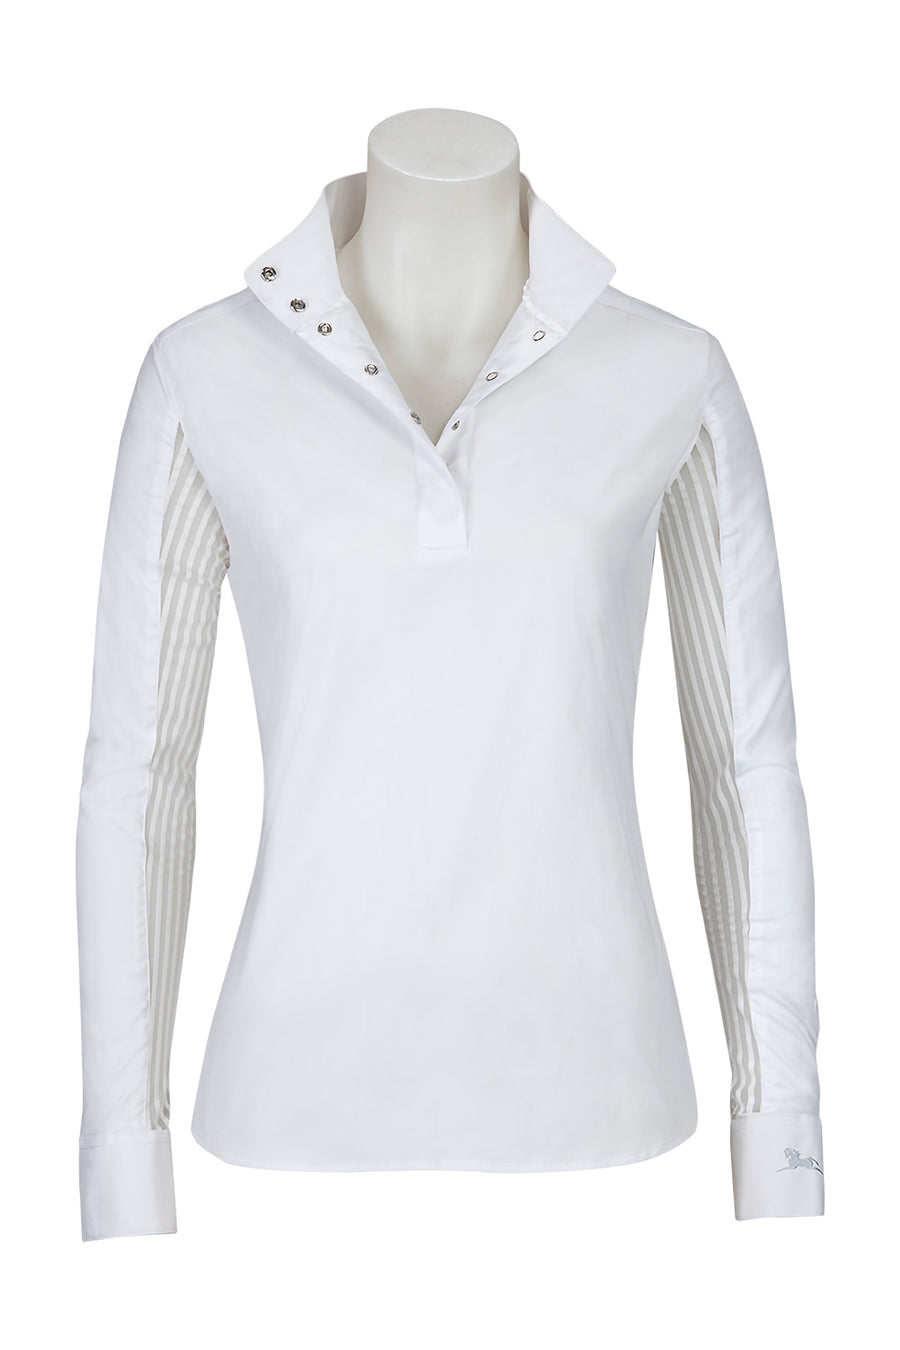 RJ Classics Lauren Ladies' Show Shirt White Stripe